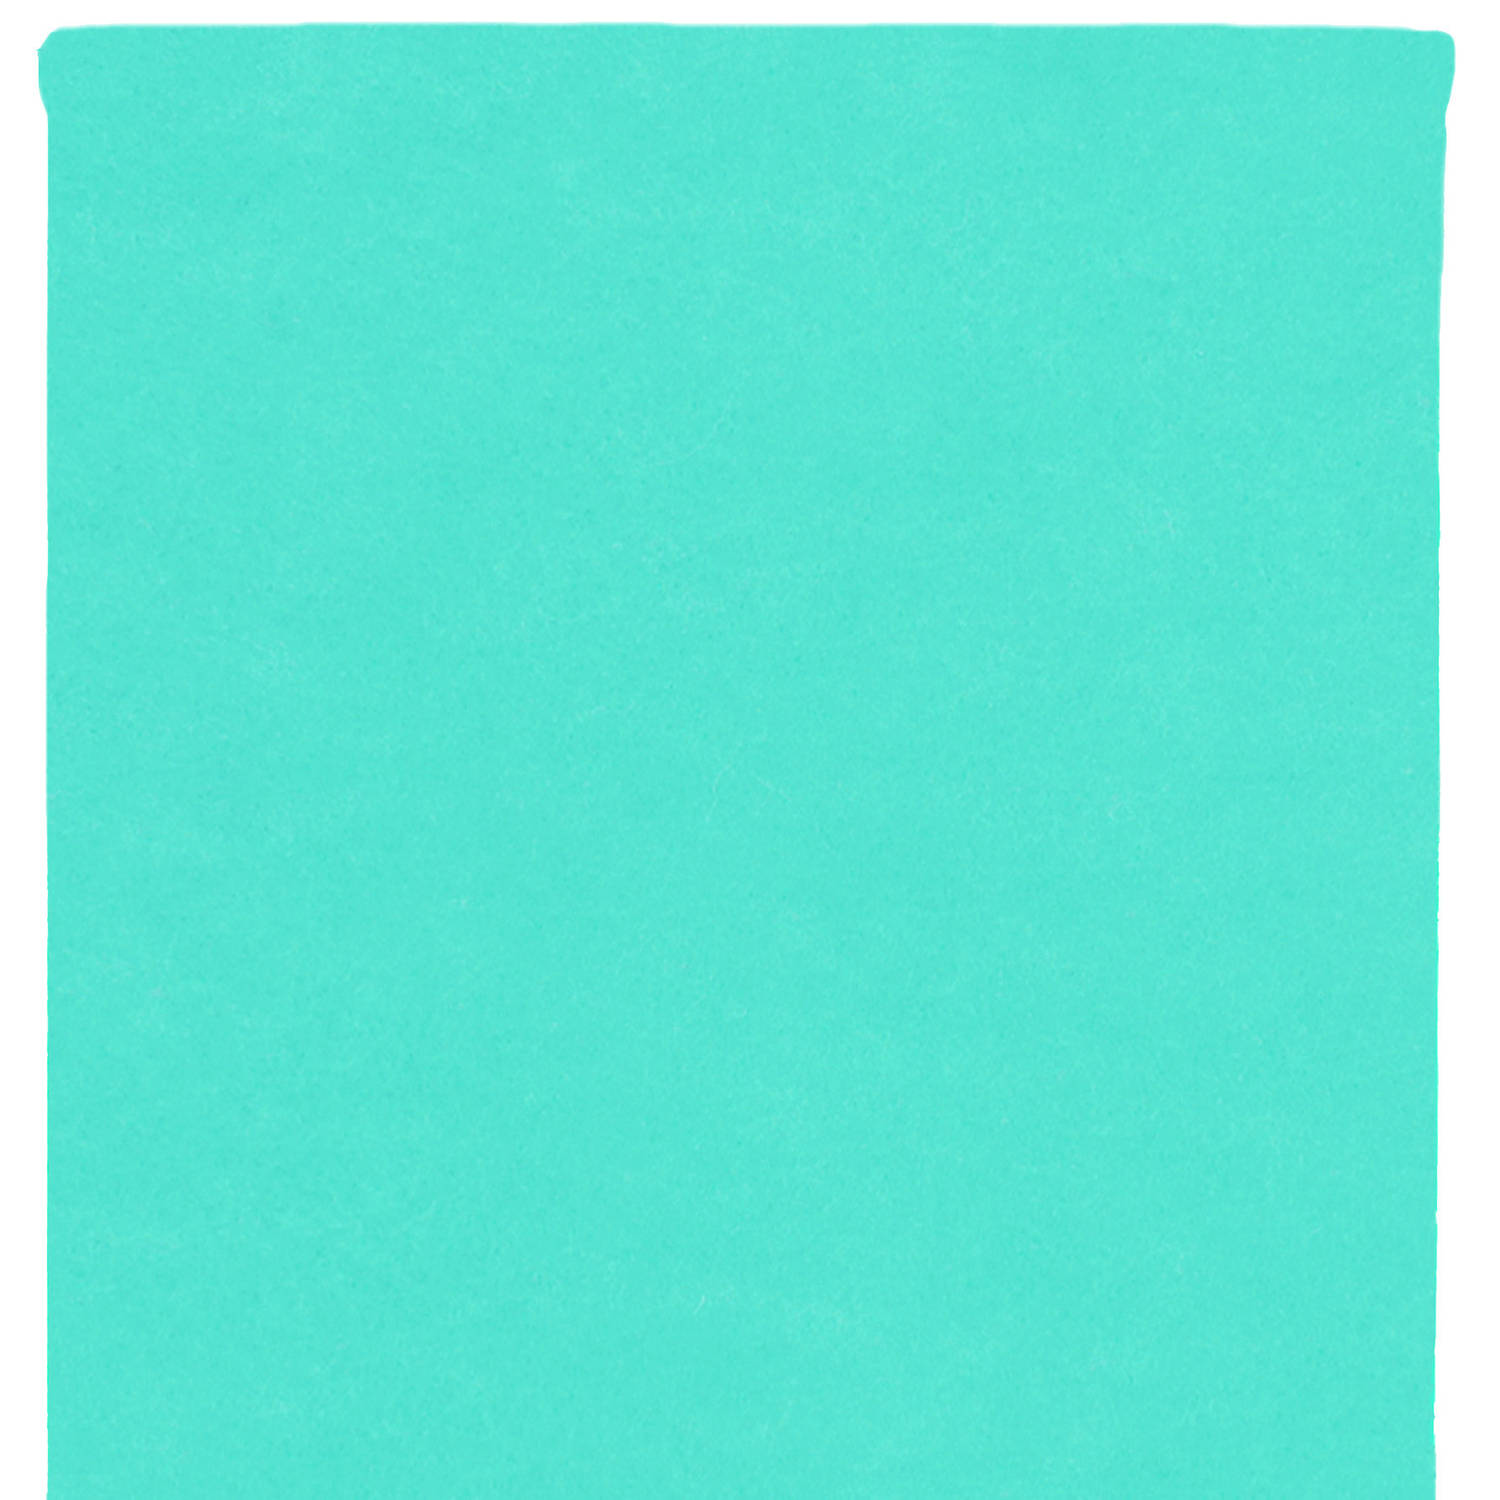 Feest tafelkleed op rol - azuurblauw - 120 cm x 10 m - non woven polyester - Feesttafelkleden